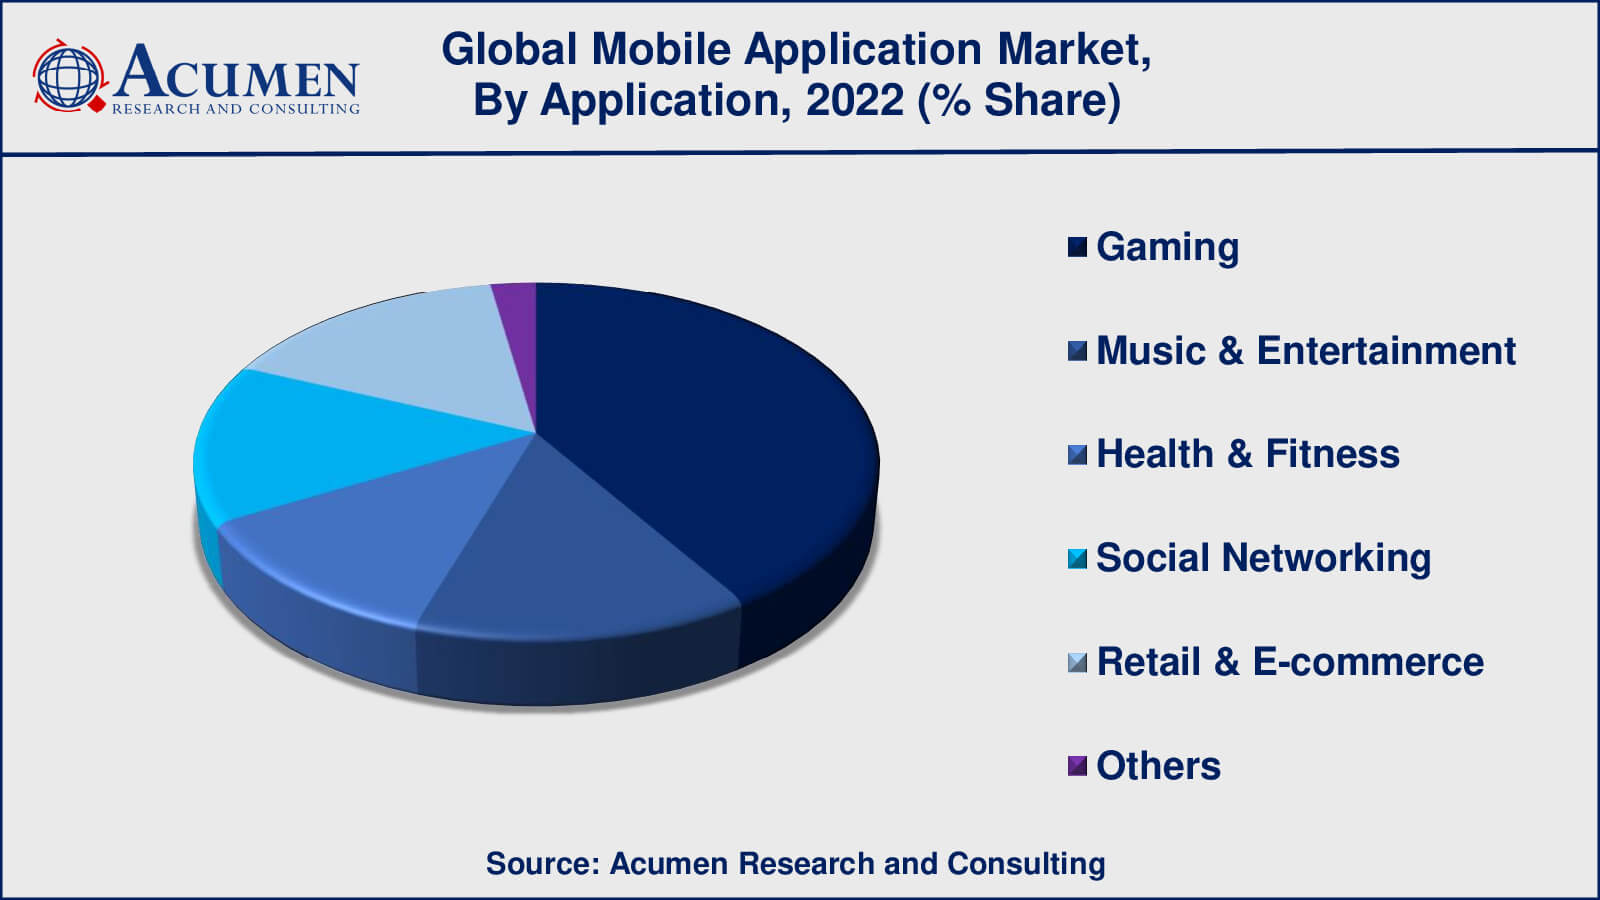 Mobile Application Market Drivers